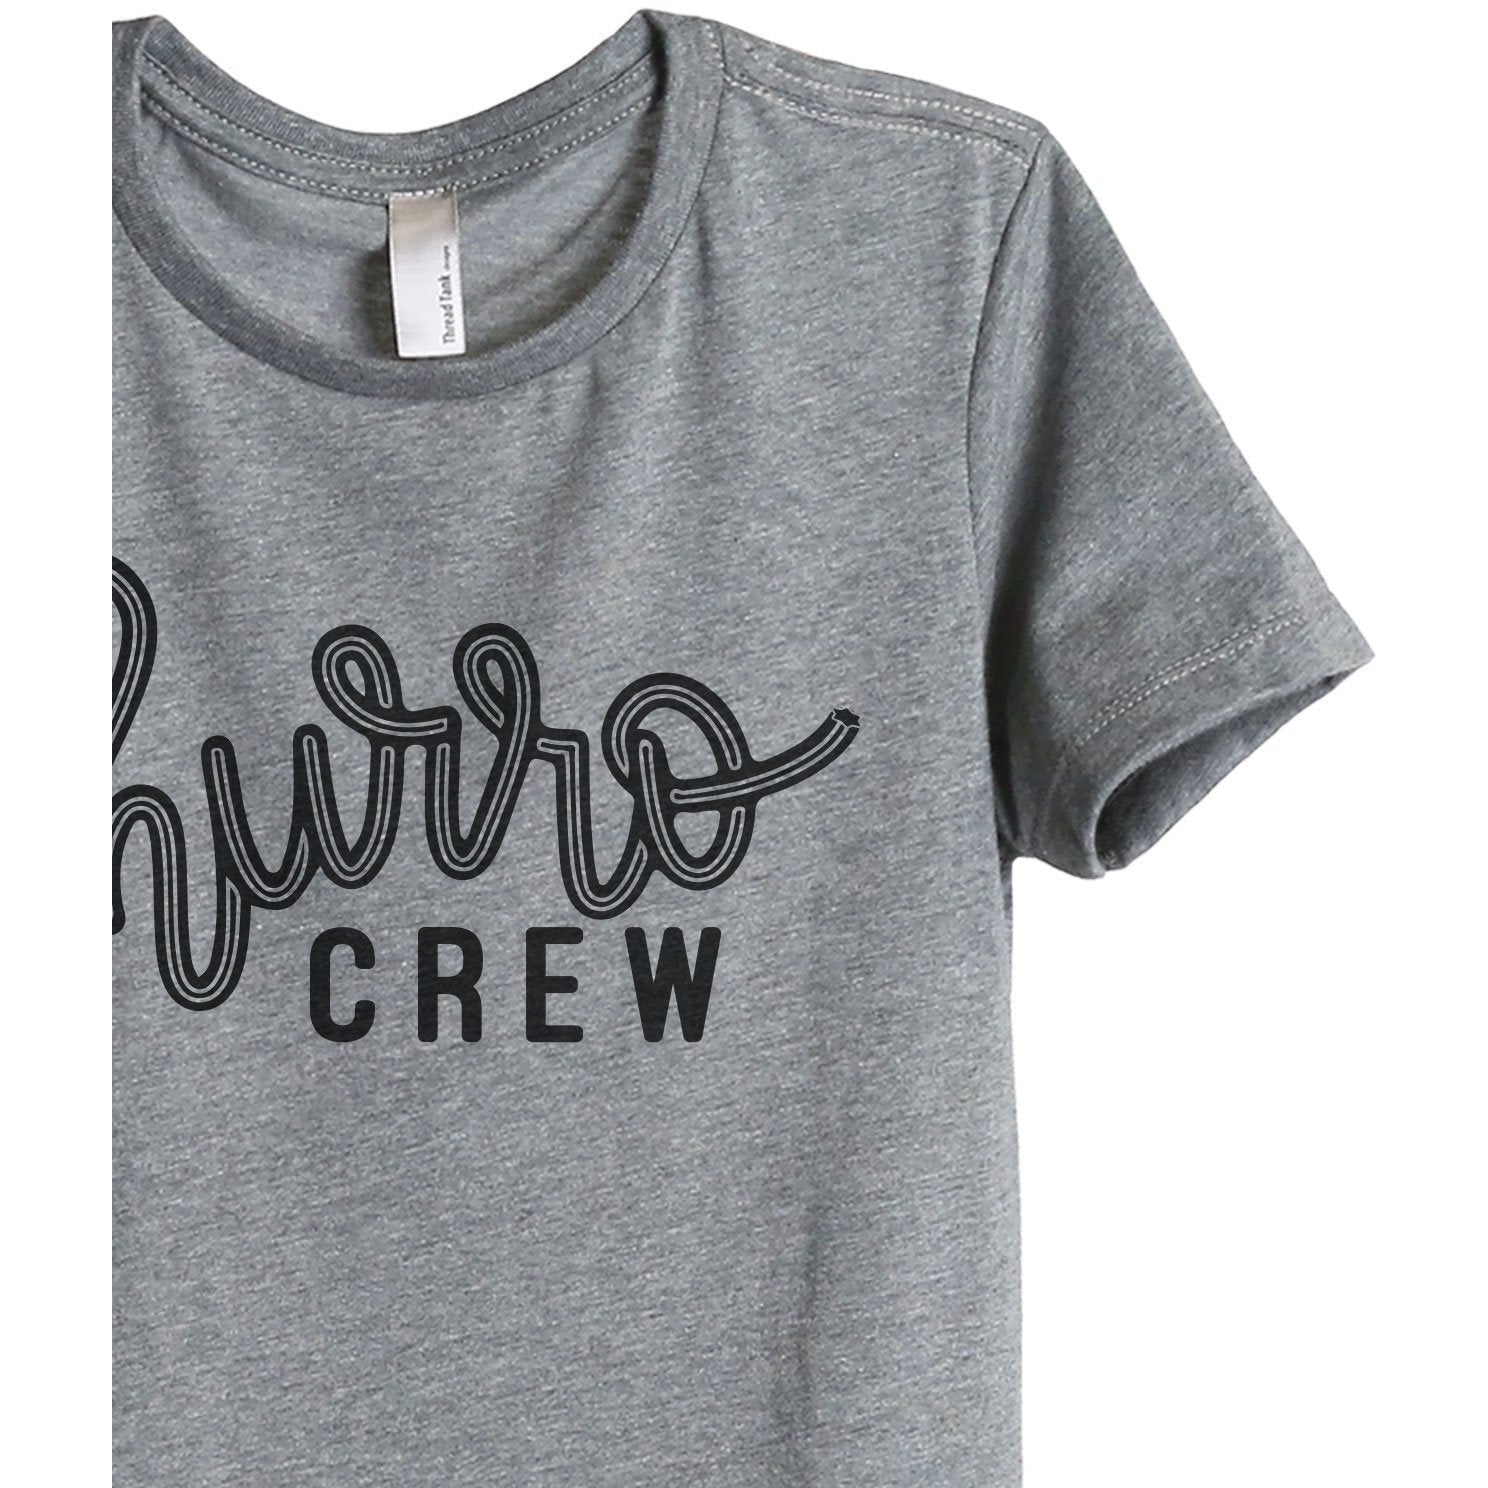 Churro Crew Women's Relaxed Crewneck T-Shirt Top Tee Heather Grey Zoom Details
